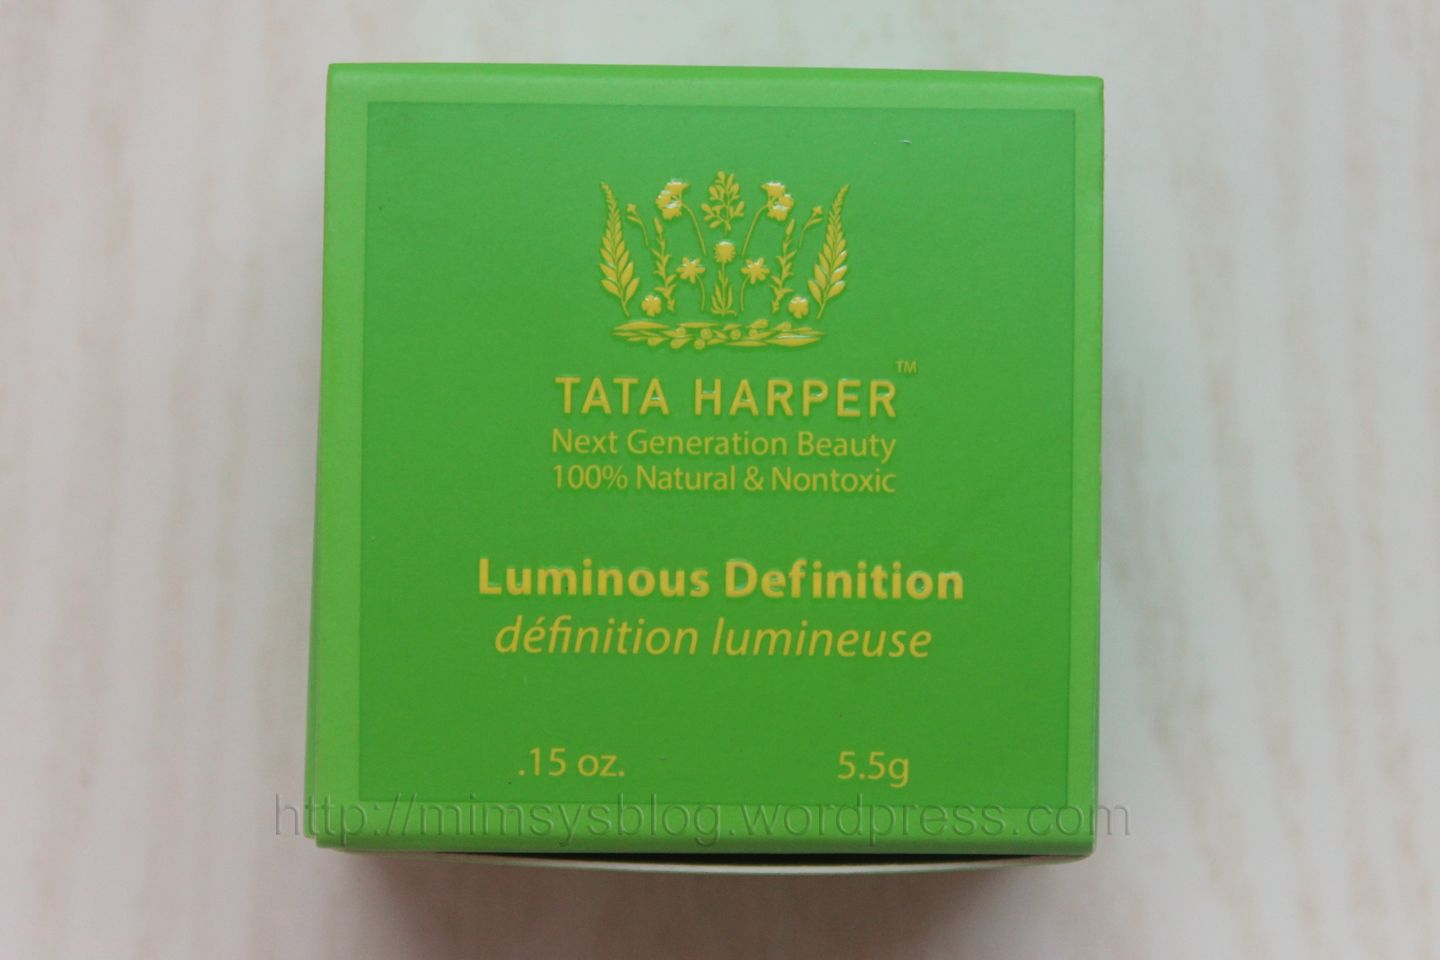 Tata Harper Luminous Definition Very Illuminating Highlight | Mimsy's Blog